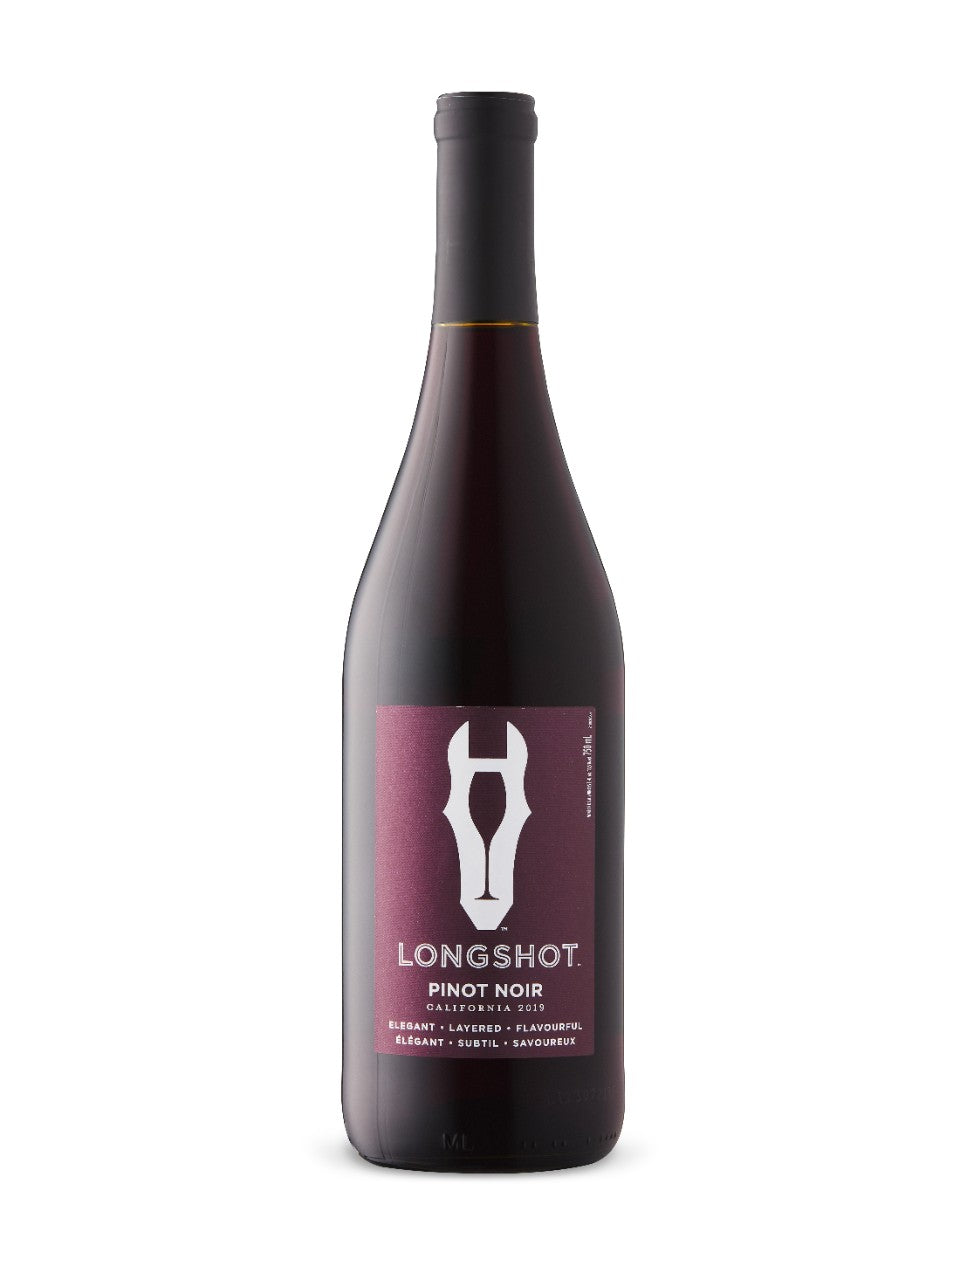 Longshot Pinot Noir 750 ml bottle